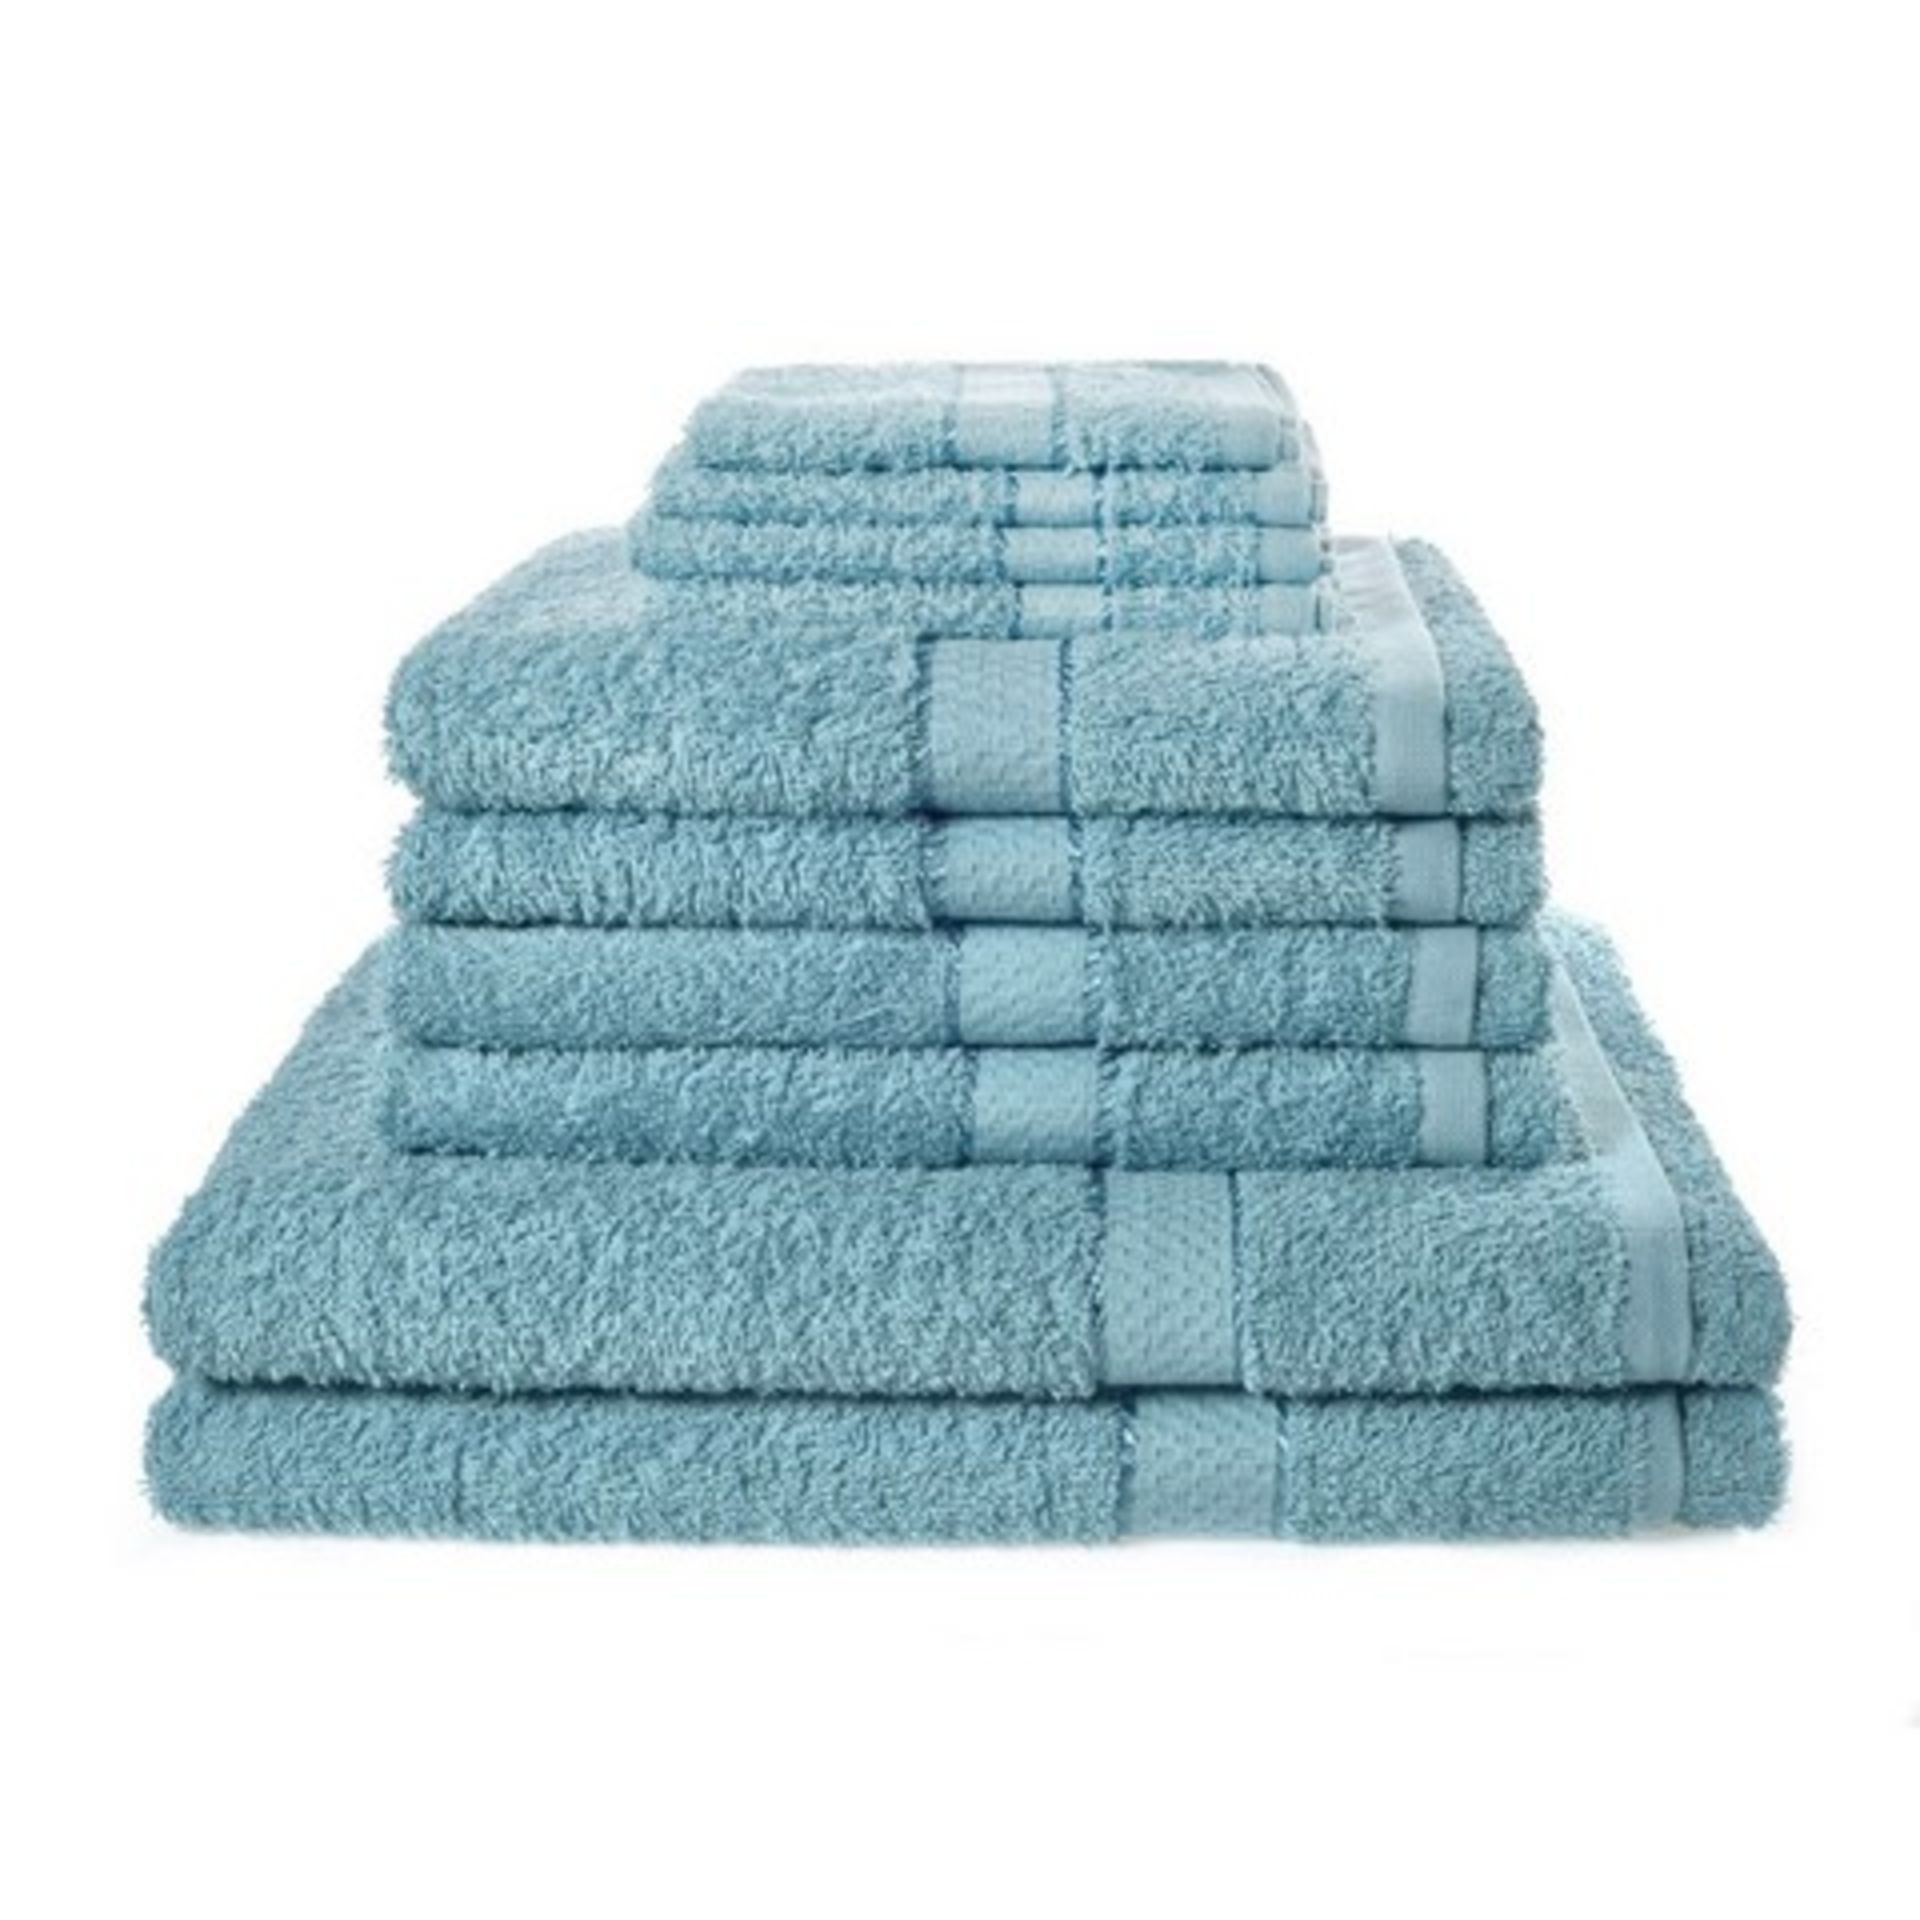 V Brand New Luxury 10 Piece Aqua Towel Bale Set Including 4 Face Cloths - 4 Hand Towels - 2 Bath